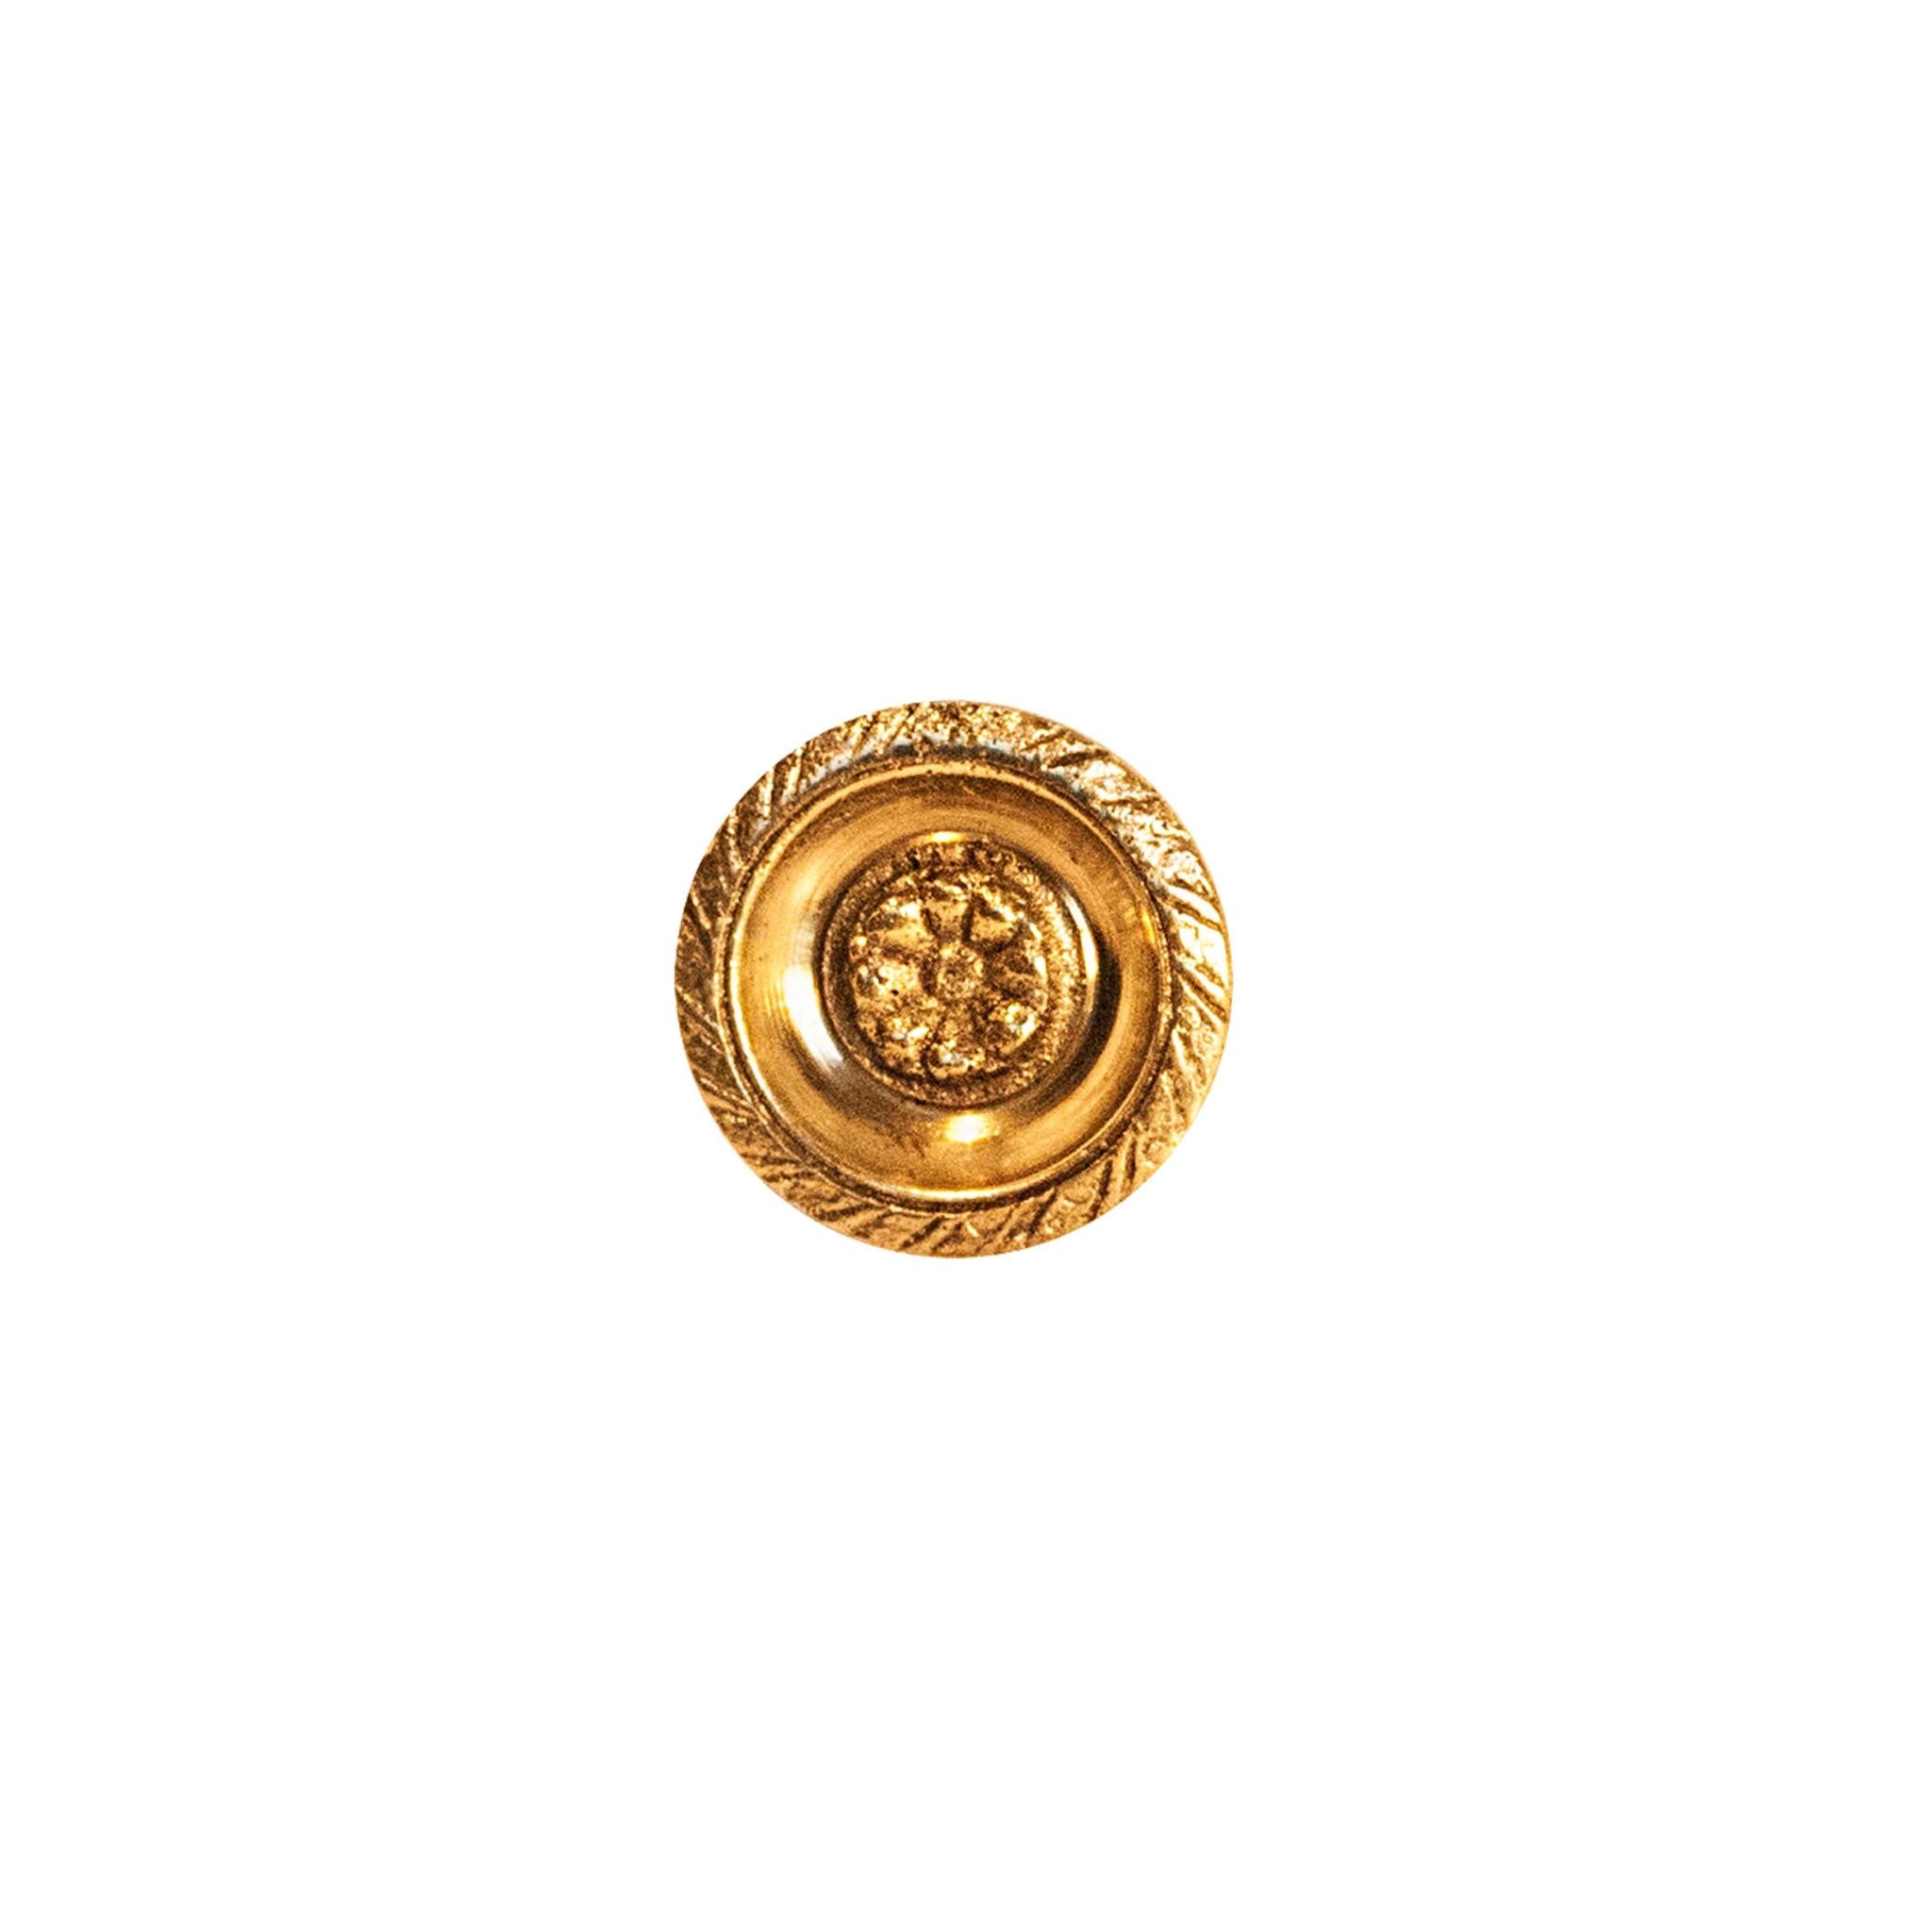 Novecento Glasgow Brass Knob: A simple circular brass knob, perfect for adding timeless elegance to your décor.